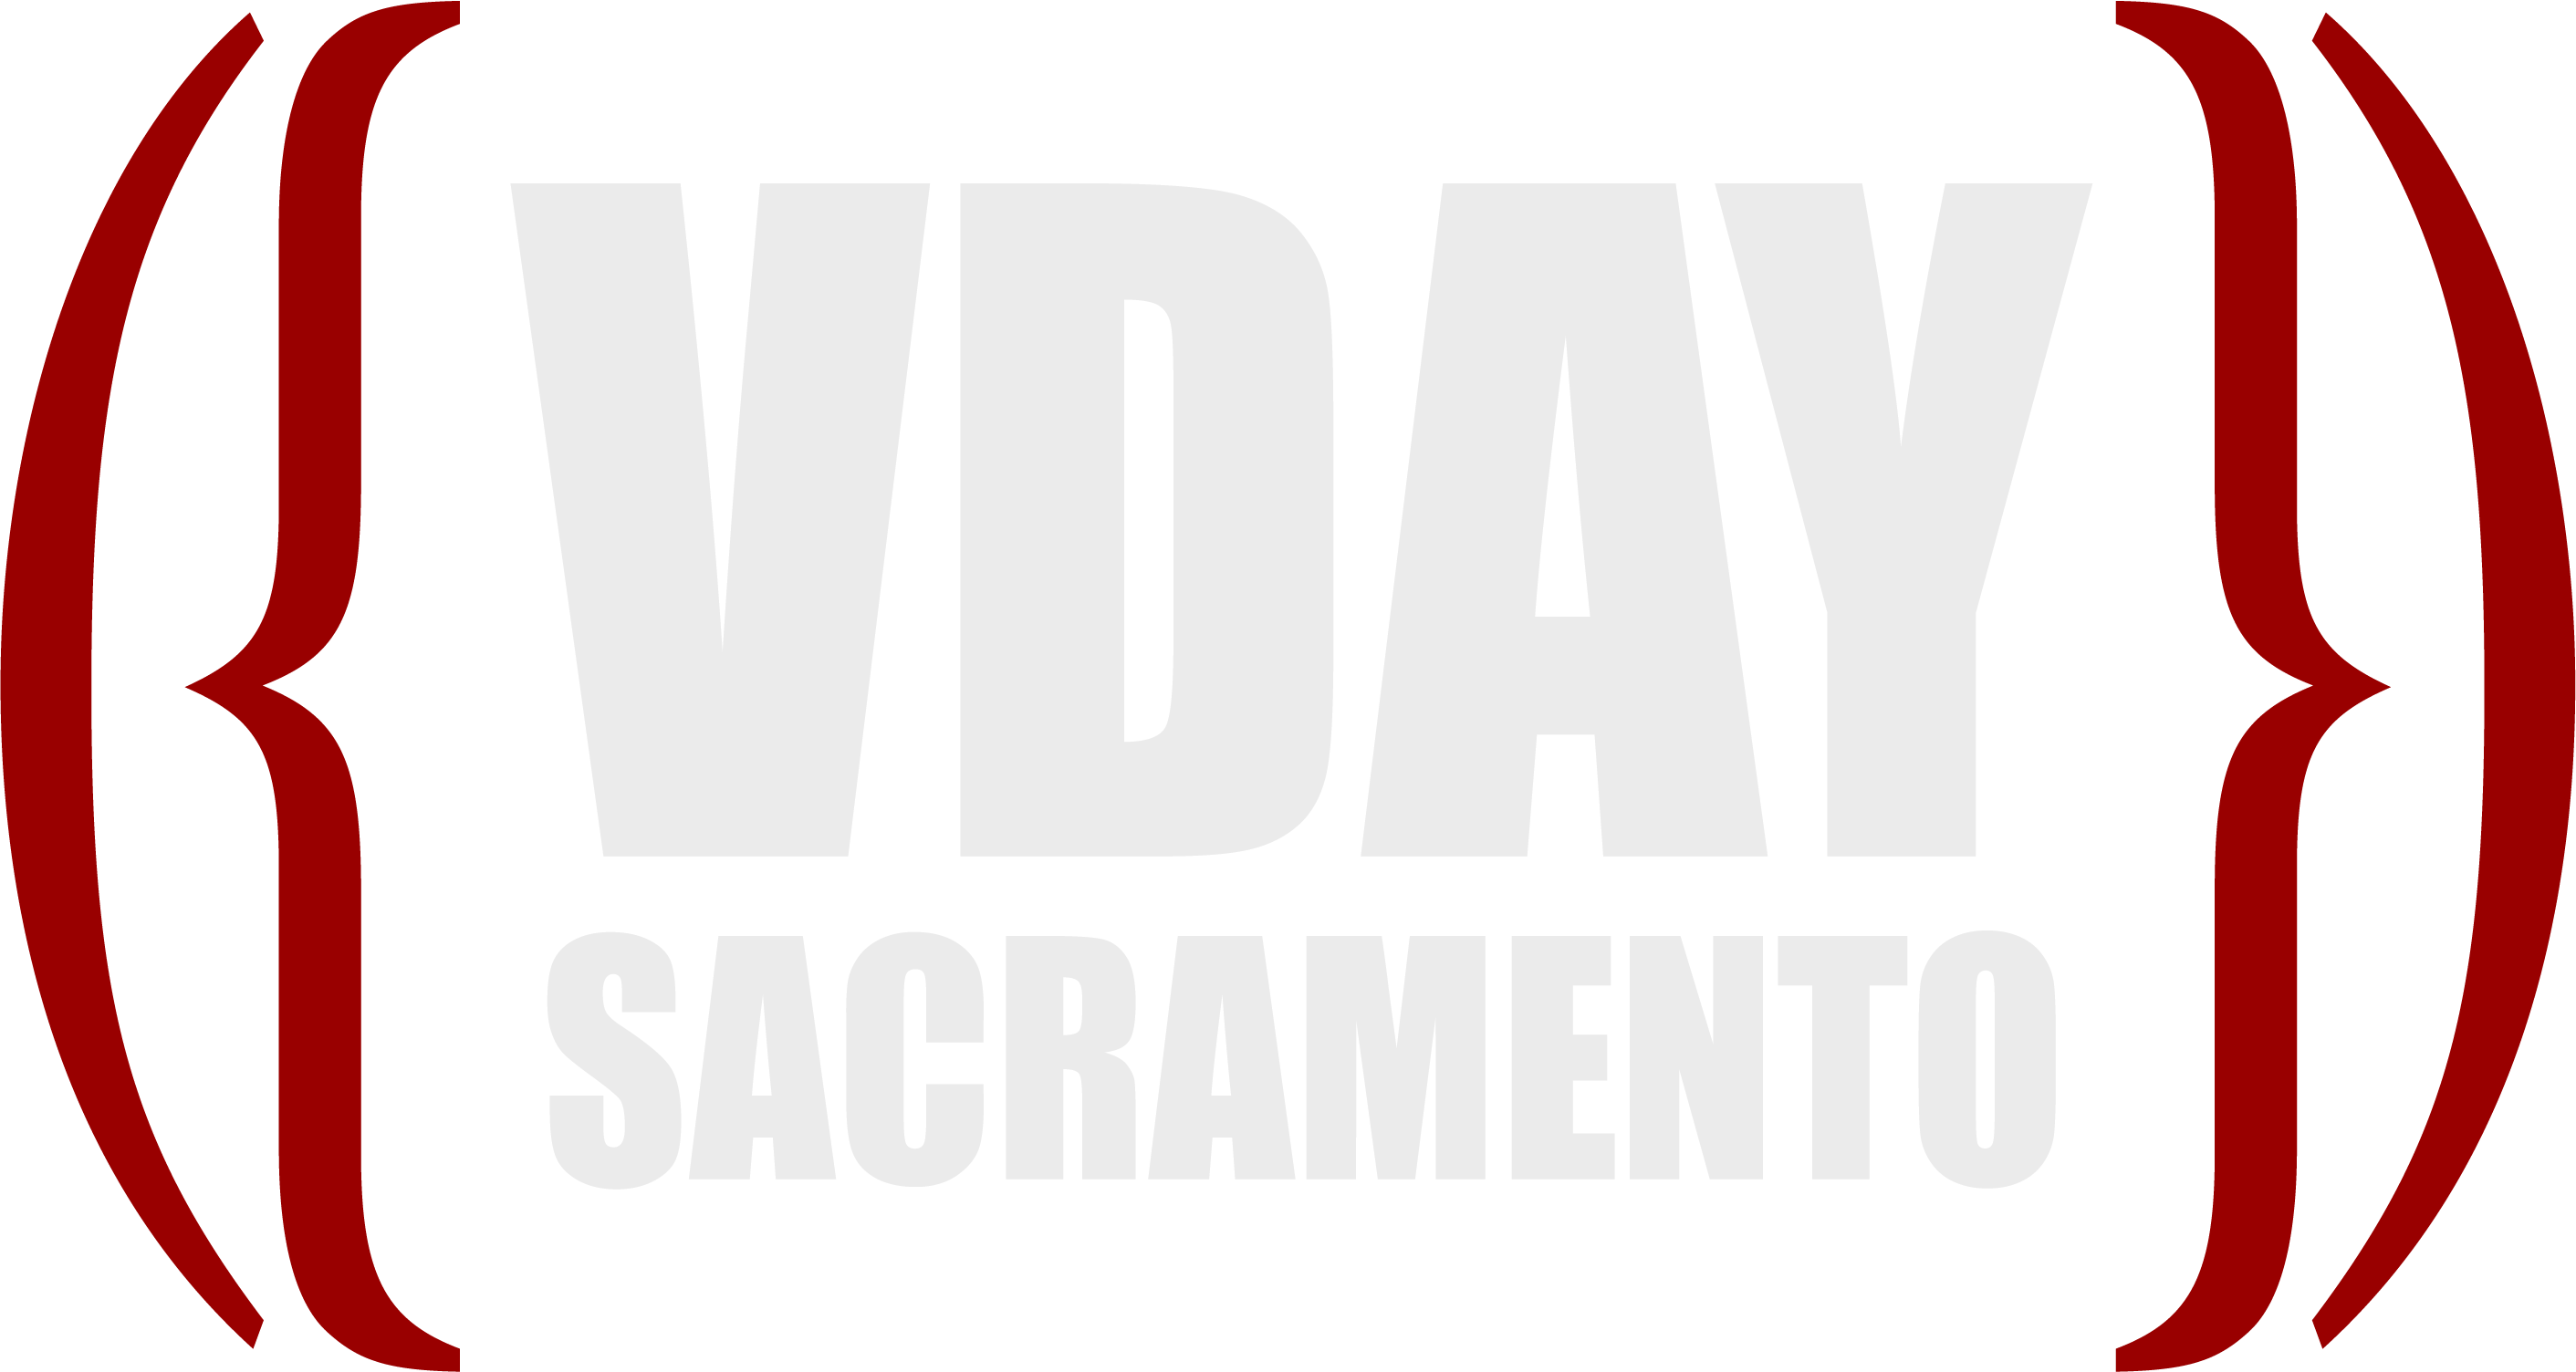 V-Day Sacramento